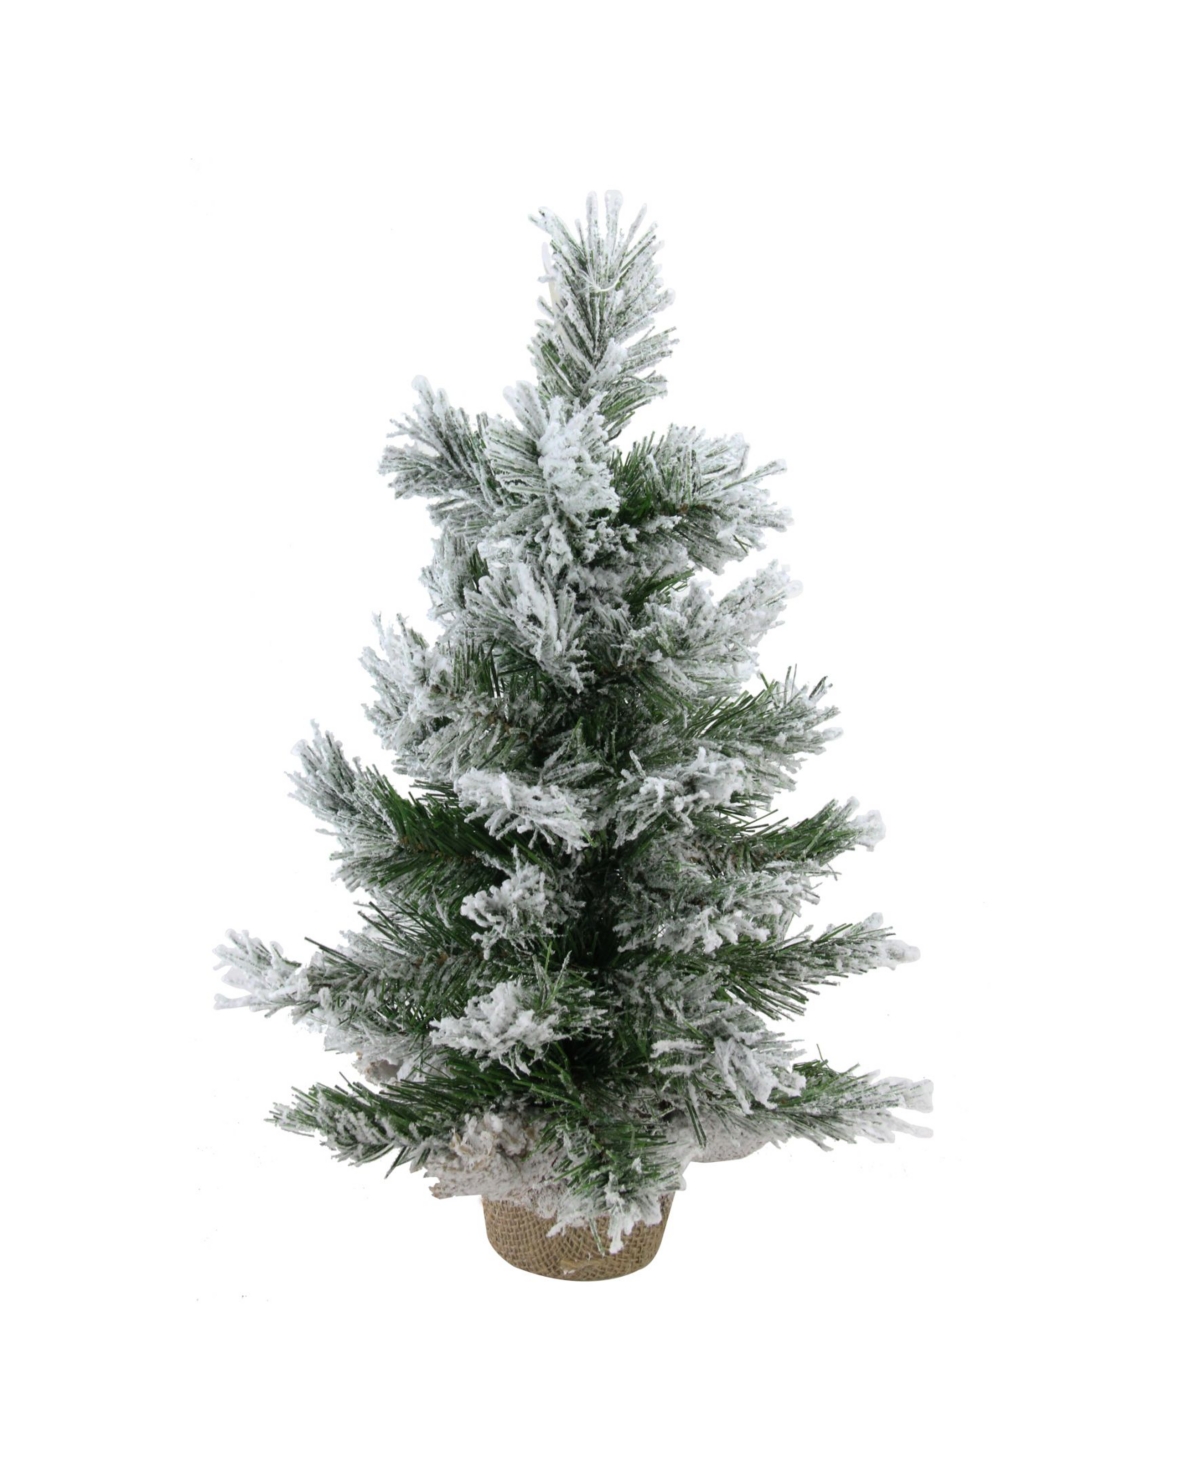 18" Flocked Pine Artificial Christmas Tree in Burlap Base - Unlit - White